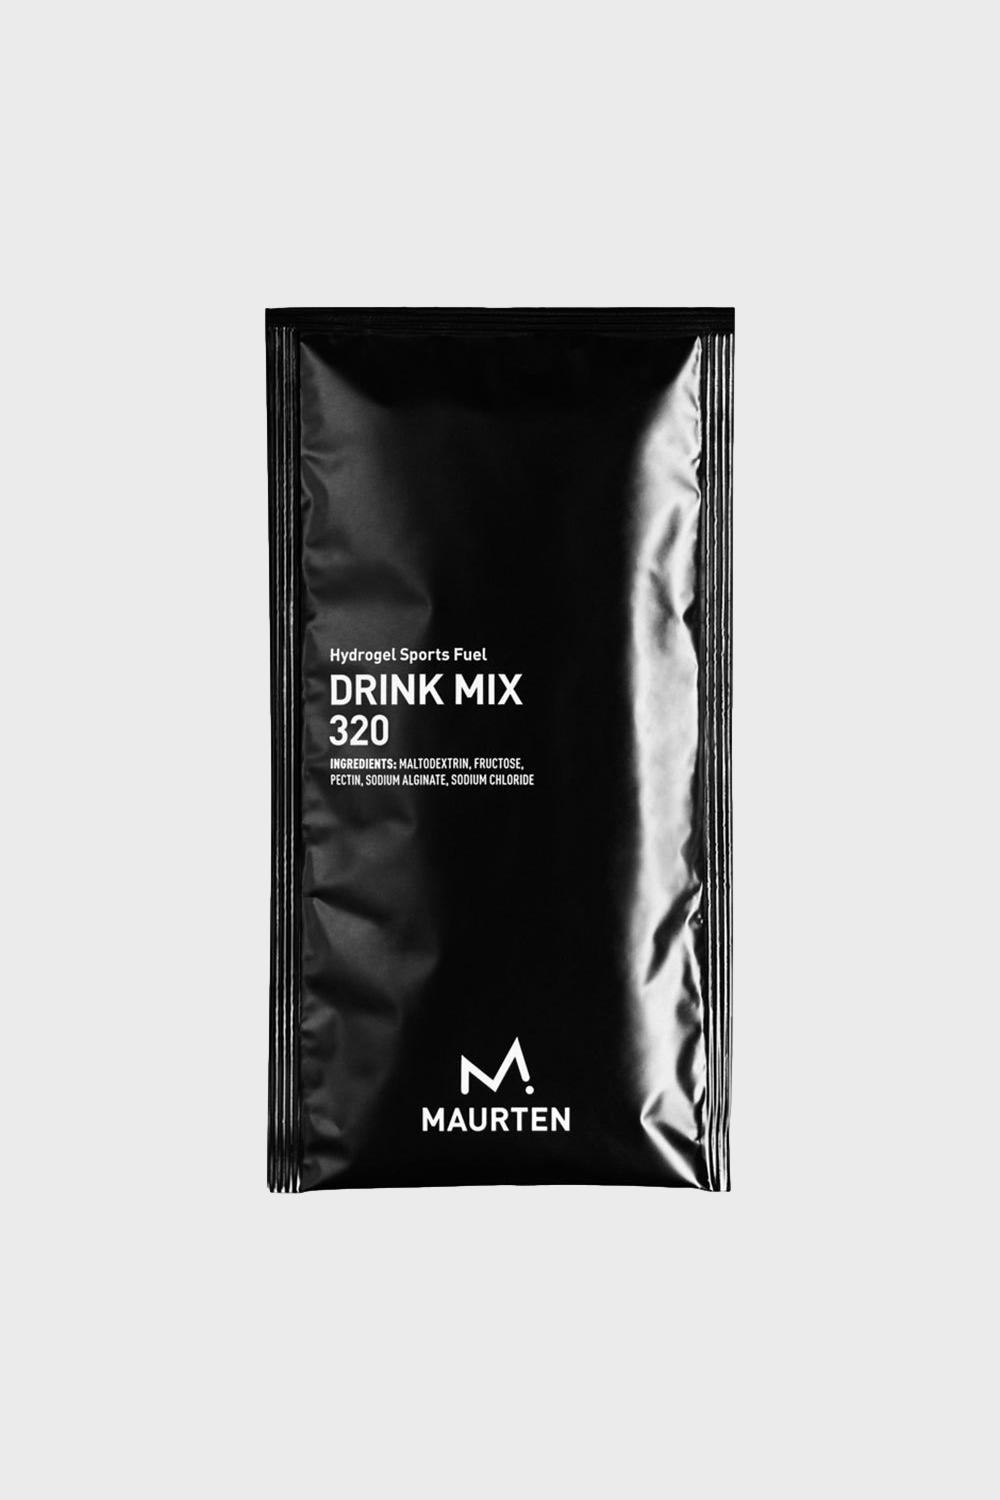 Maurten - DRINK MIX 320 - UNIT